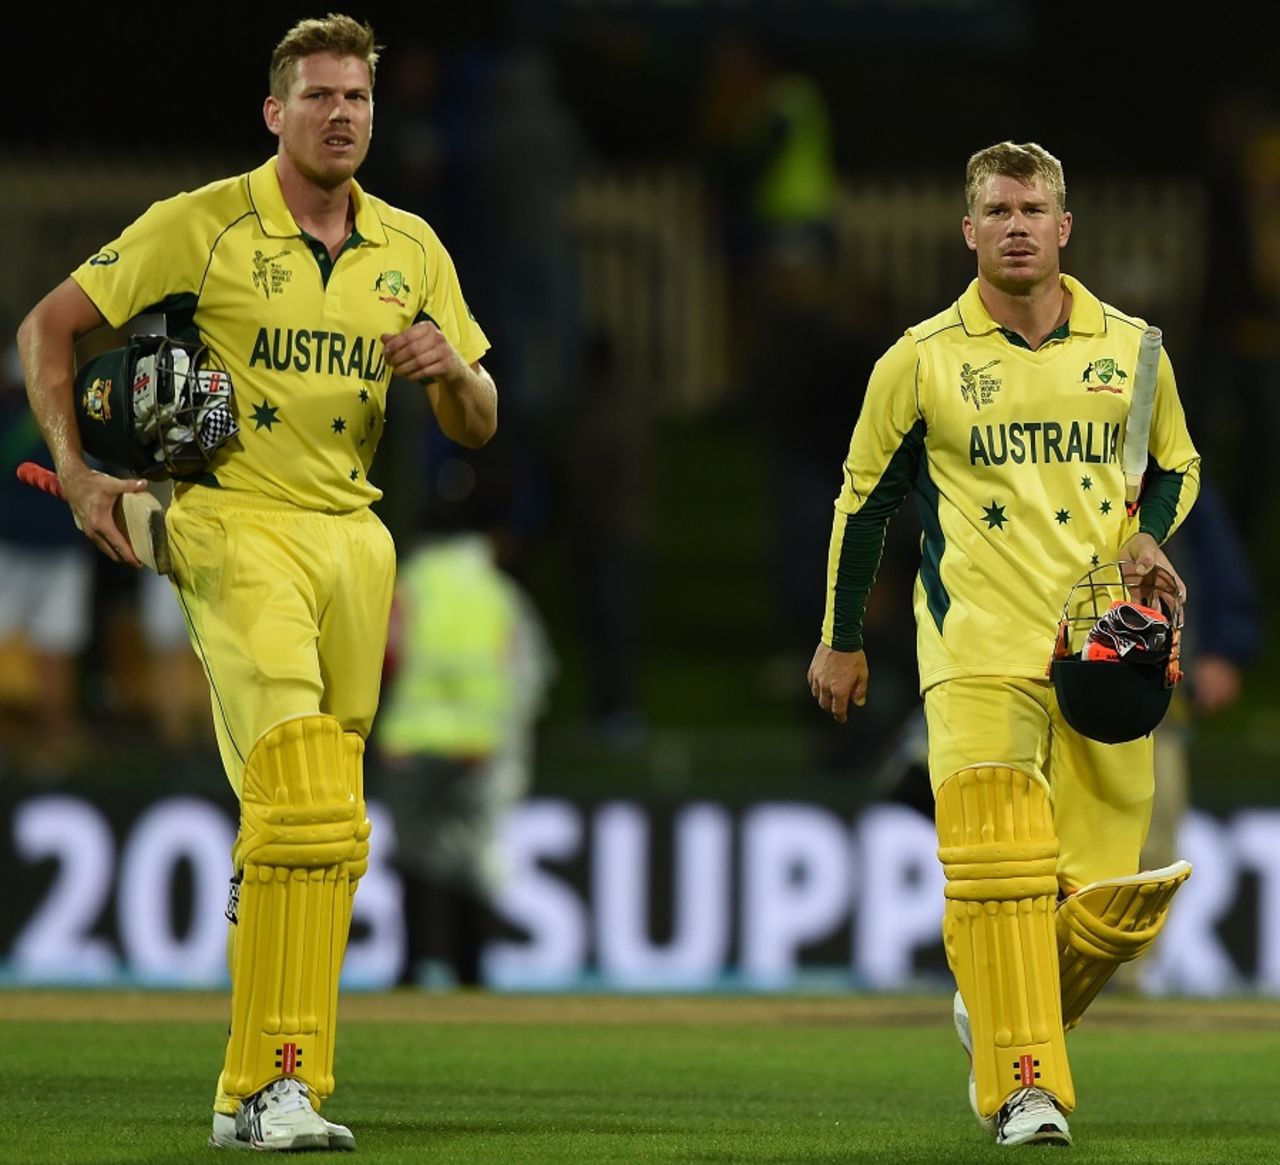 James Faulkner and David Warner walk off after sealing a seven-wicket win, Australia v Scotland, World Cup 2015, Group A, Hobart, March 14, 2015